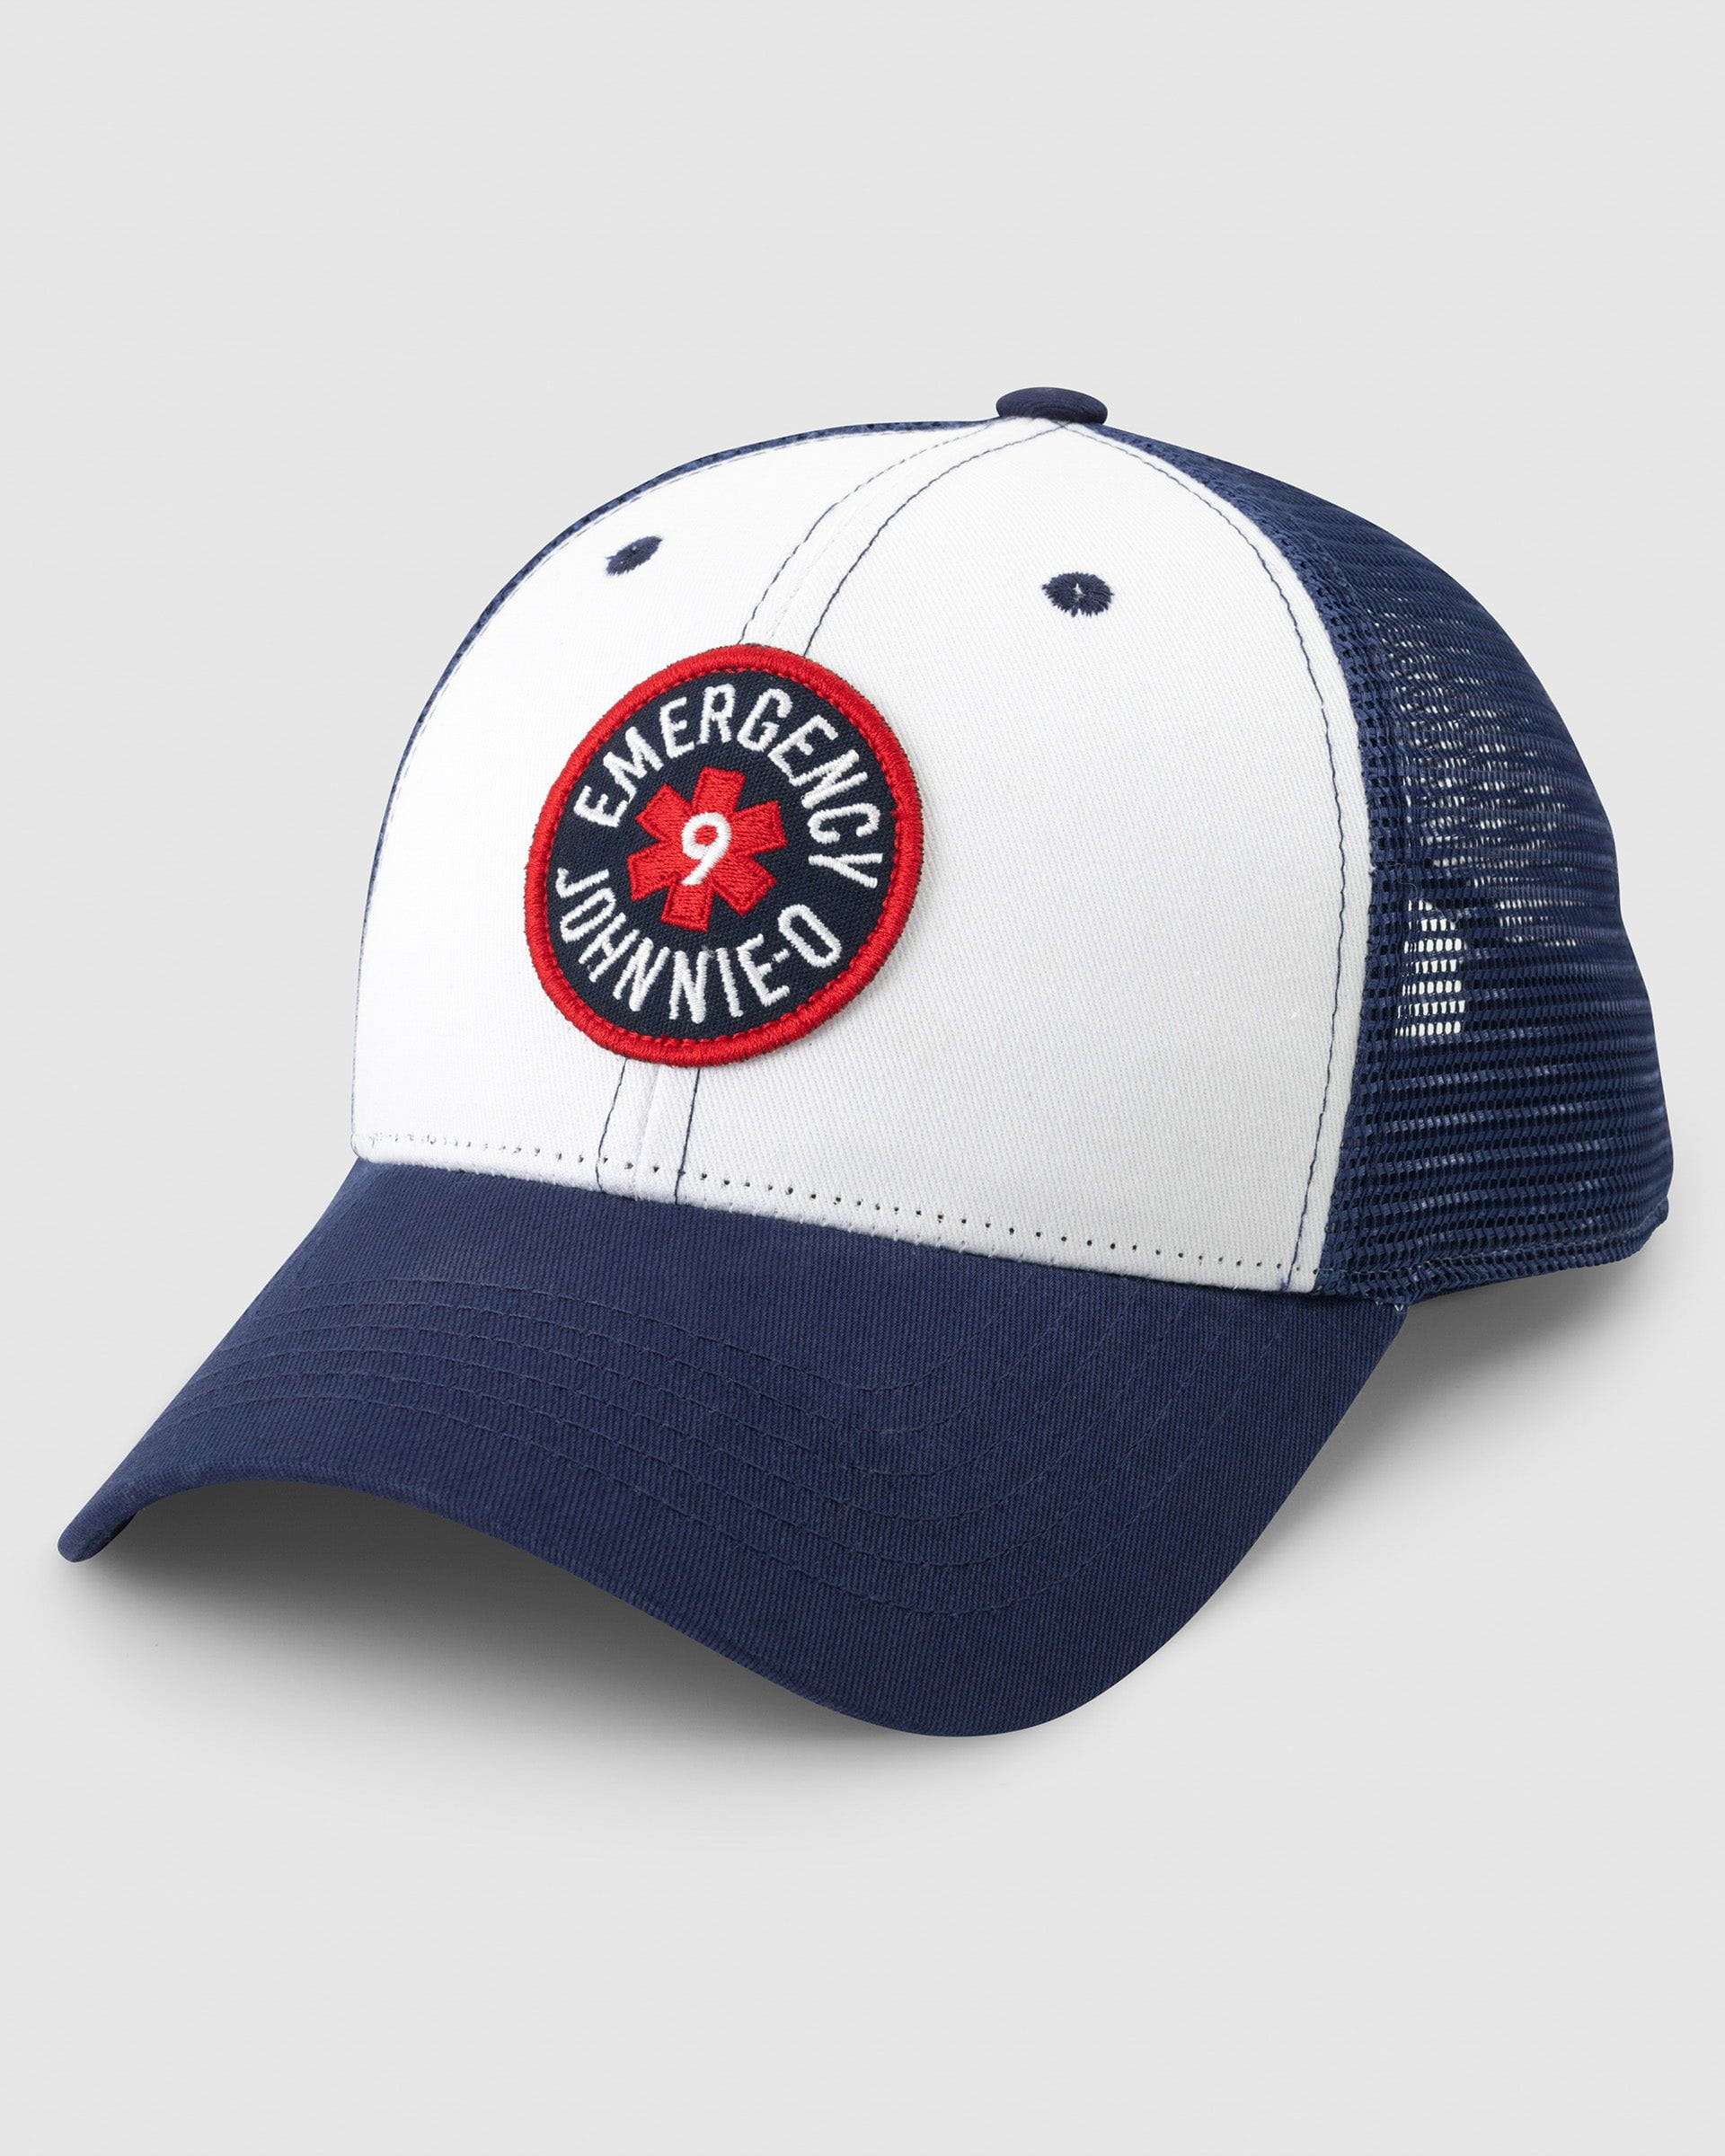 Johnnie-O Bullseye Windstop Performance Hat